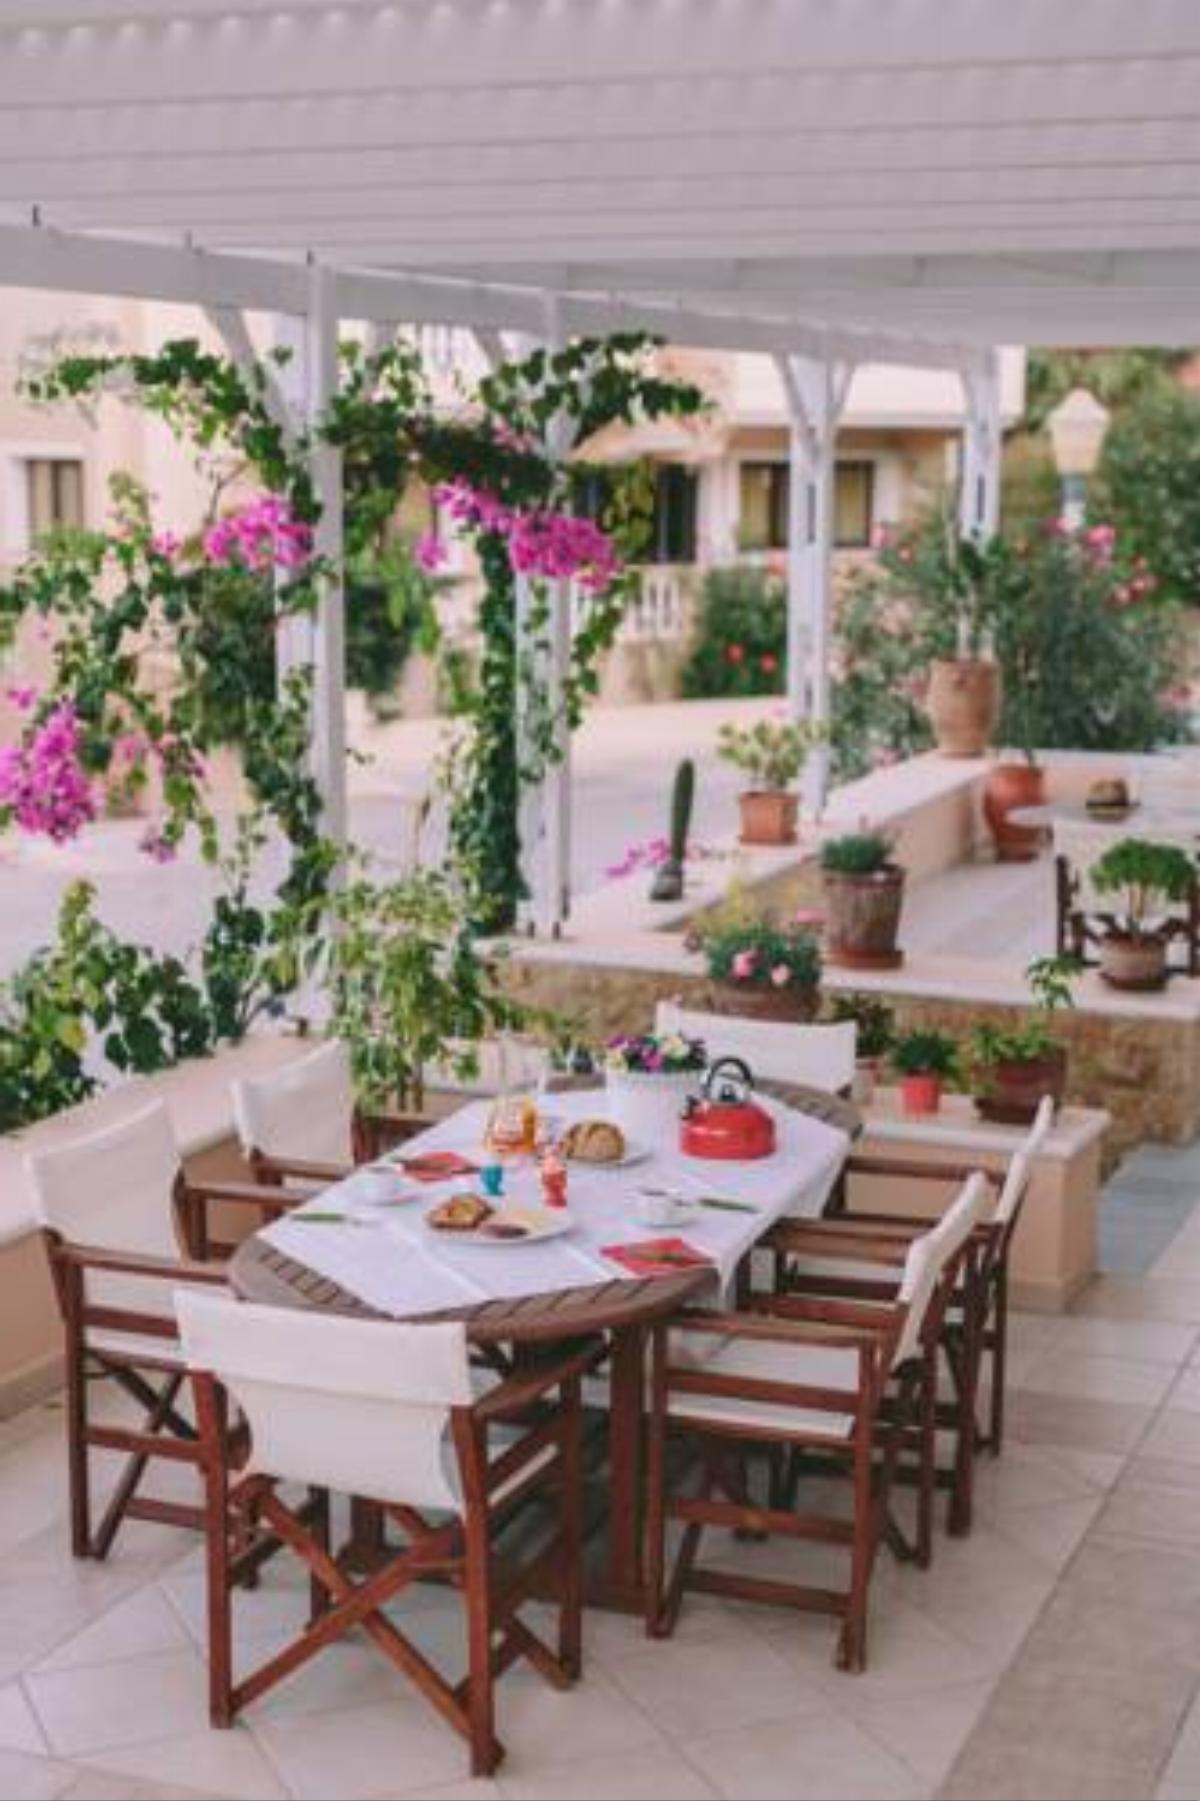 Dimitra Apartments Hotel Karpathos Greece